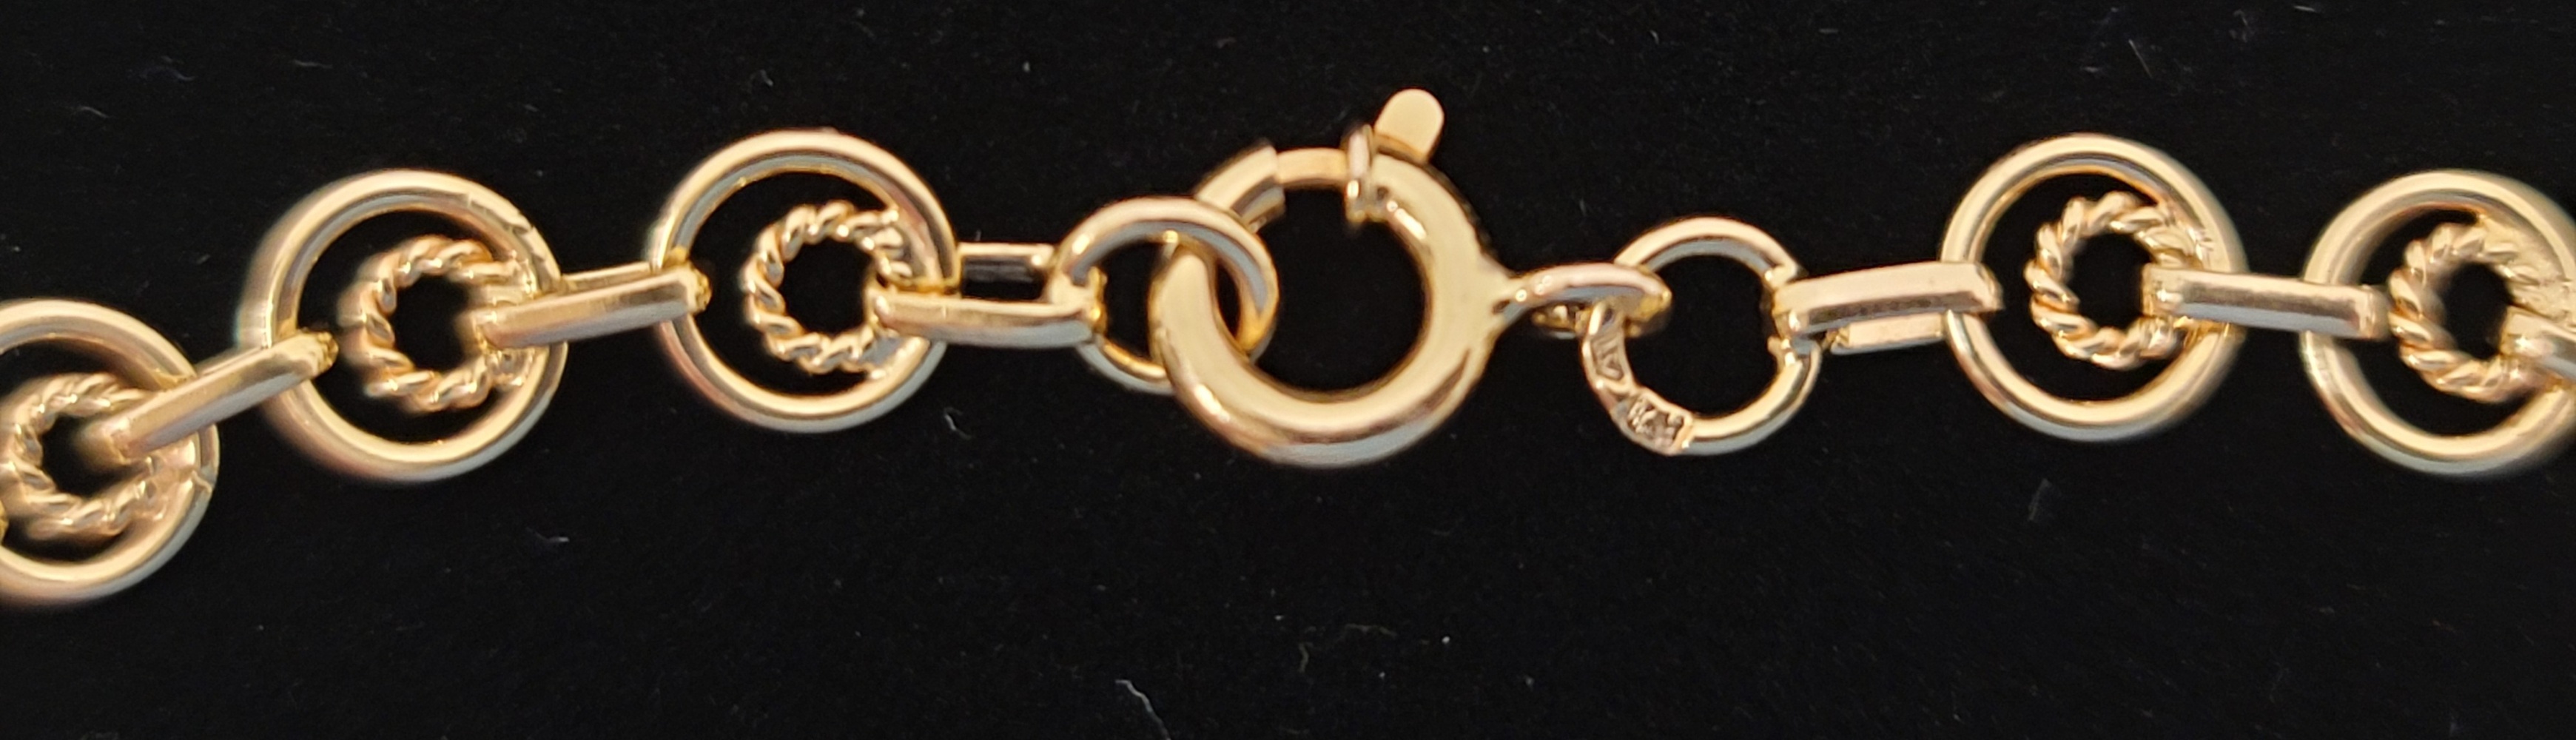 18 Karat Yellow Gold Rolo Bracelet - Size: 7.5-inch